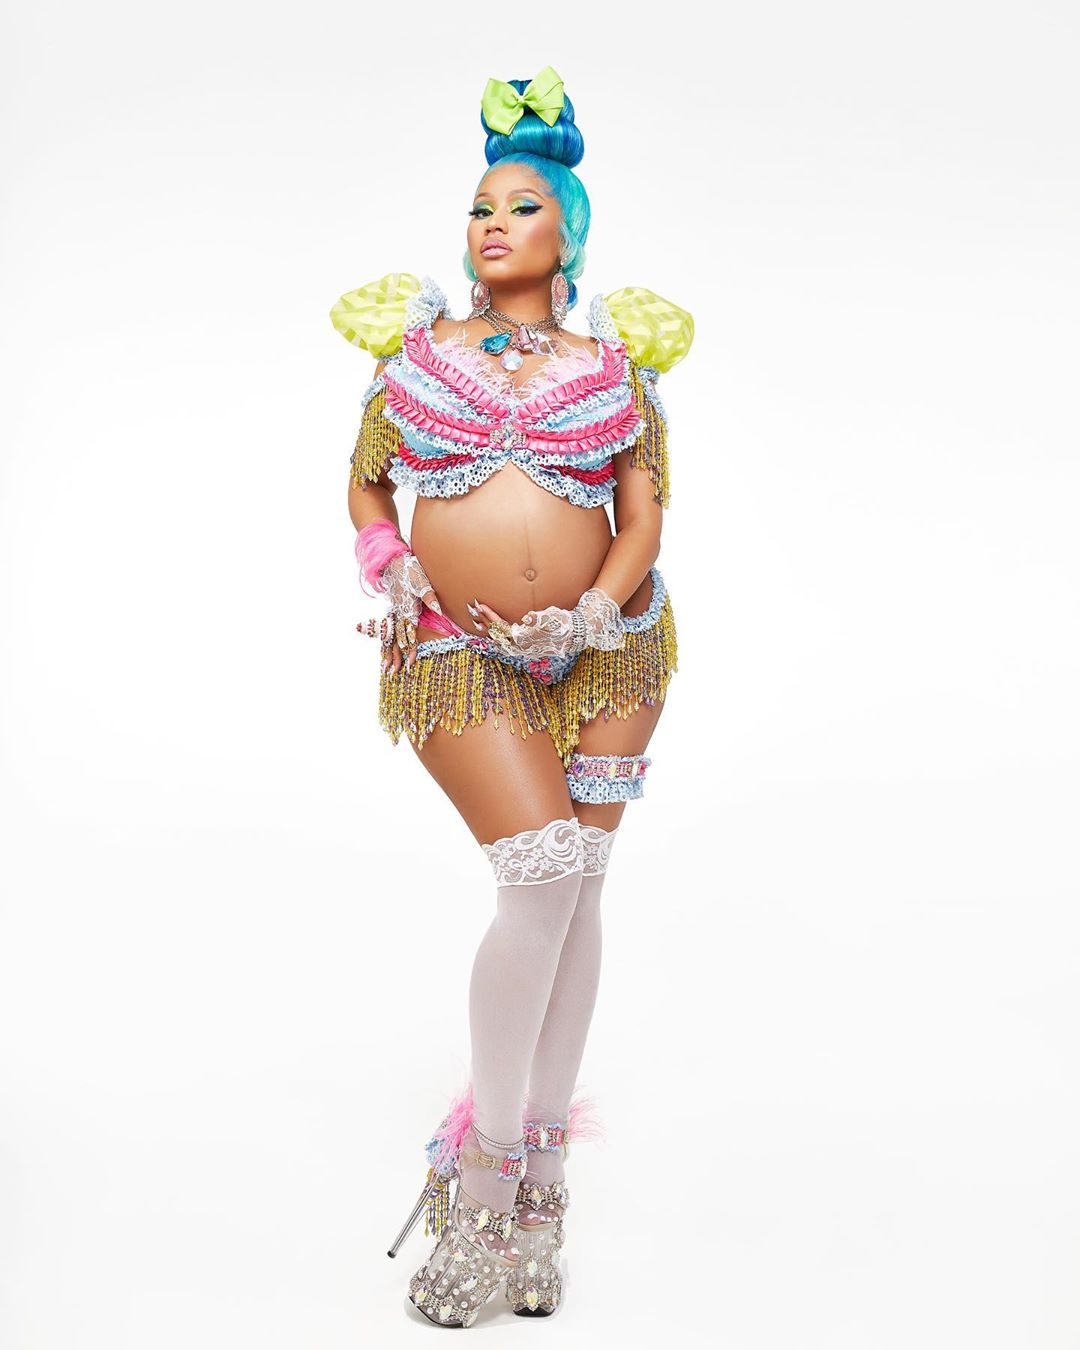 Nicki Minaj Introduced the World To Her Newborn Son